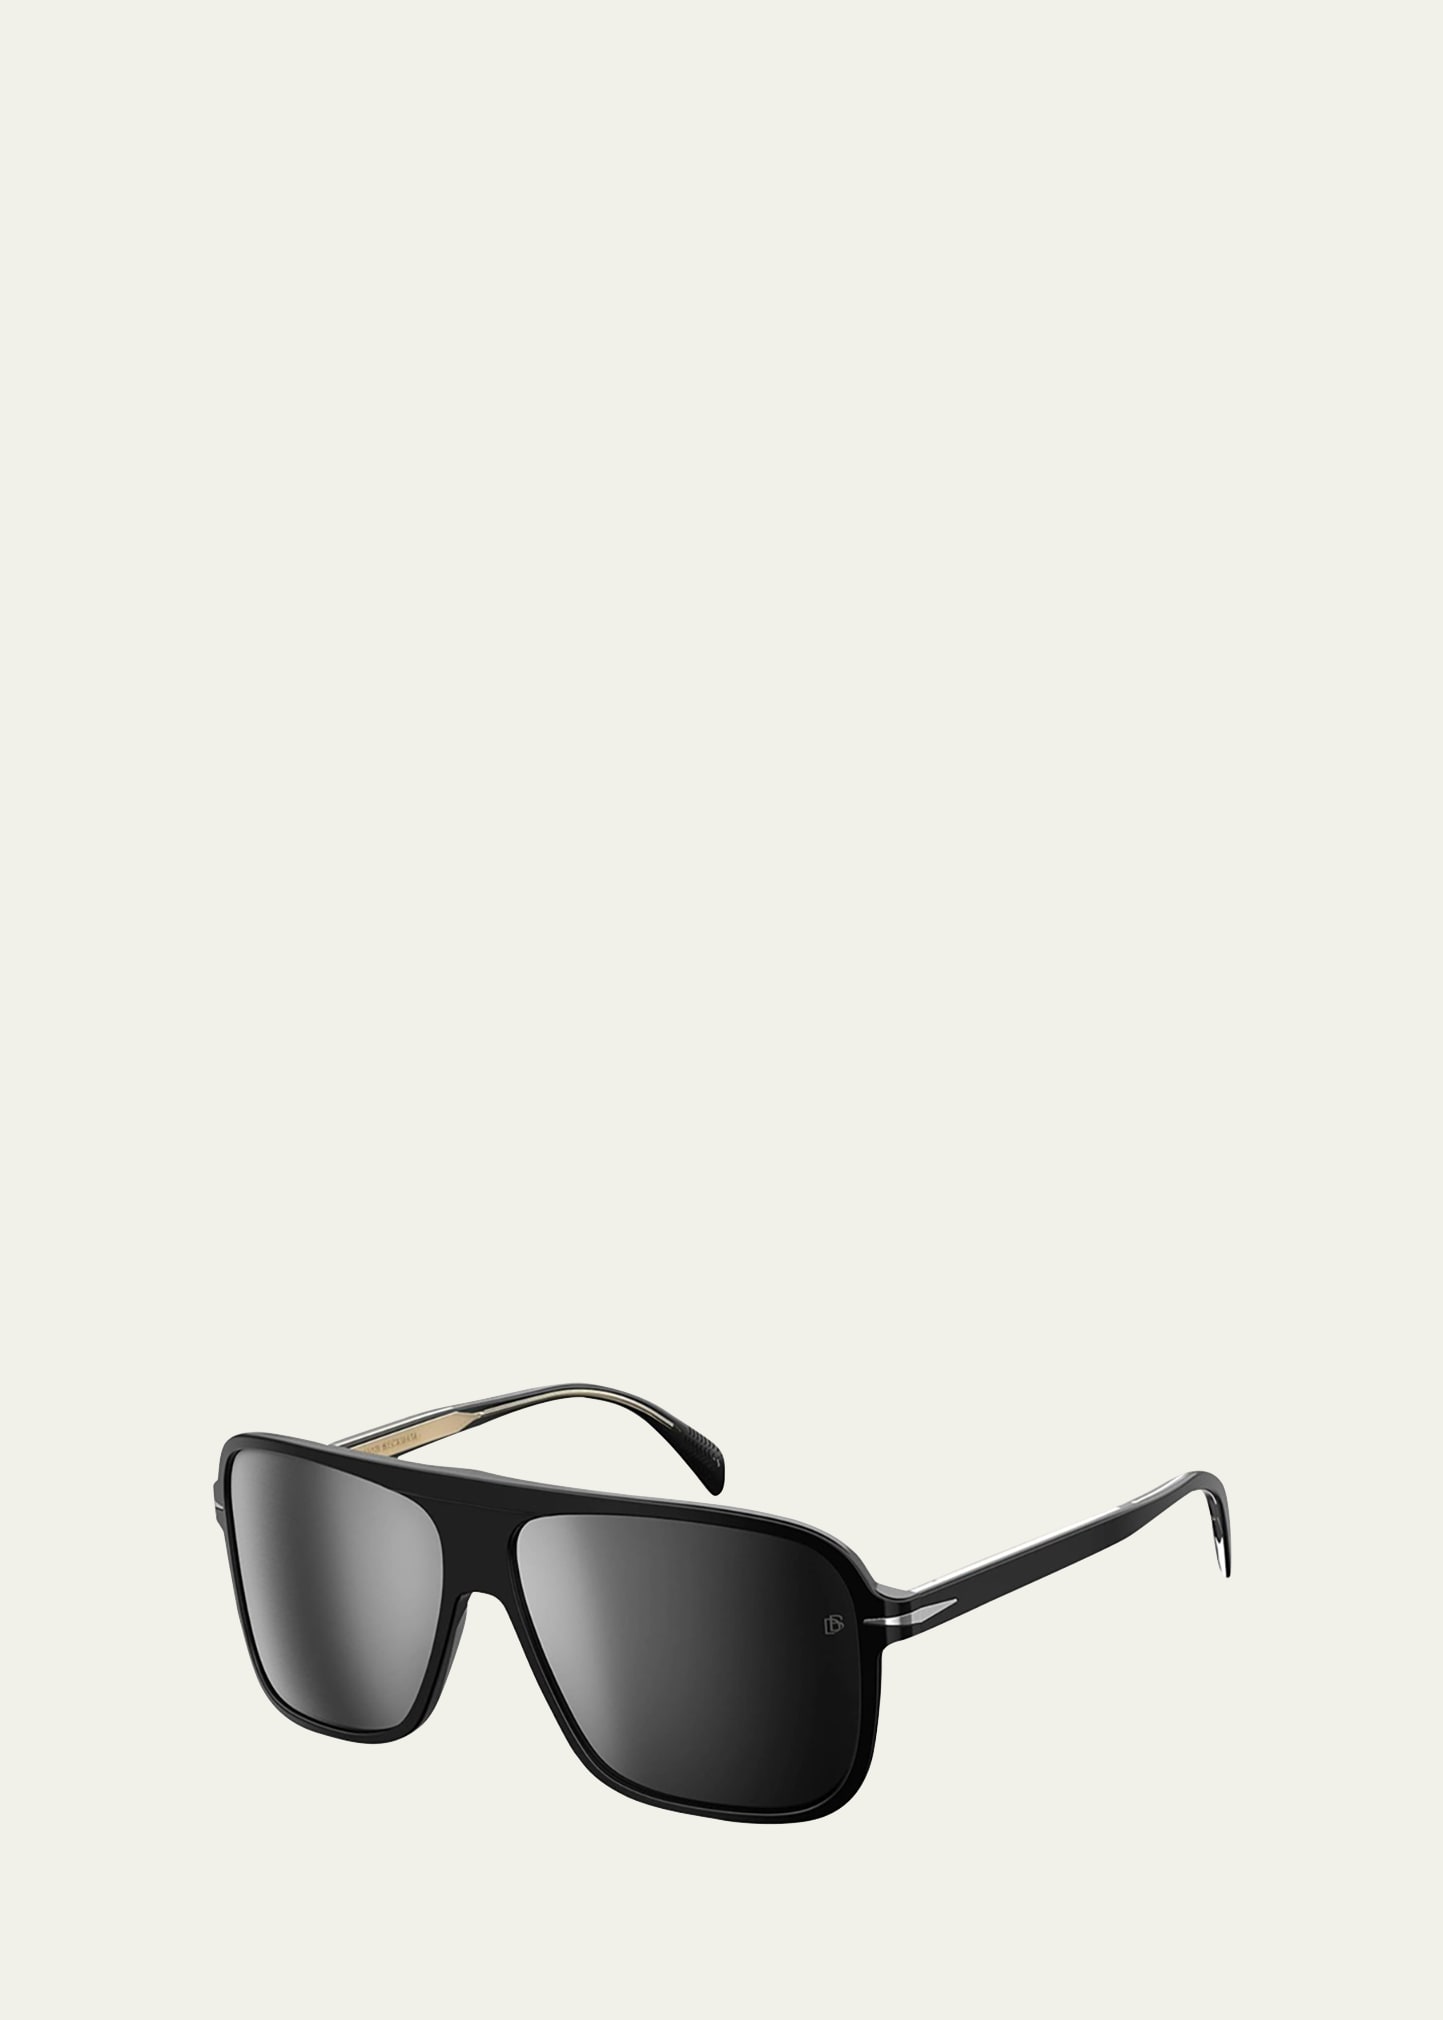 David Beckham Men's Square Patterned Acetate Sunglasses